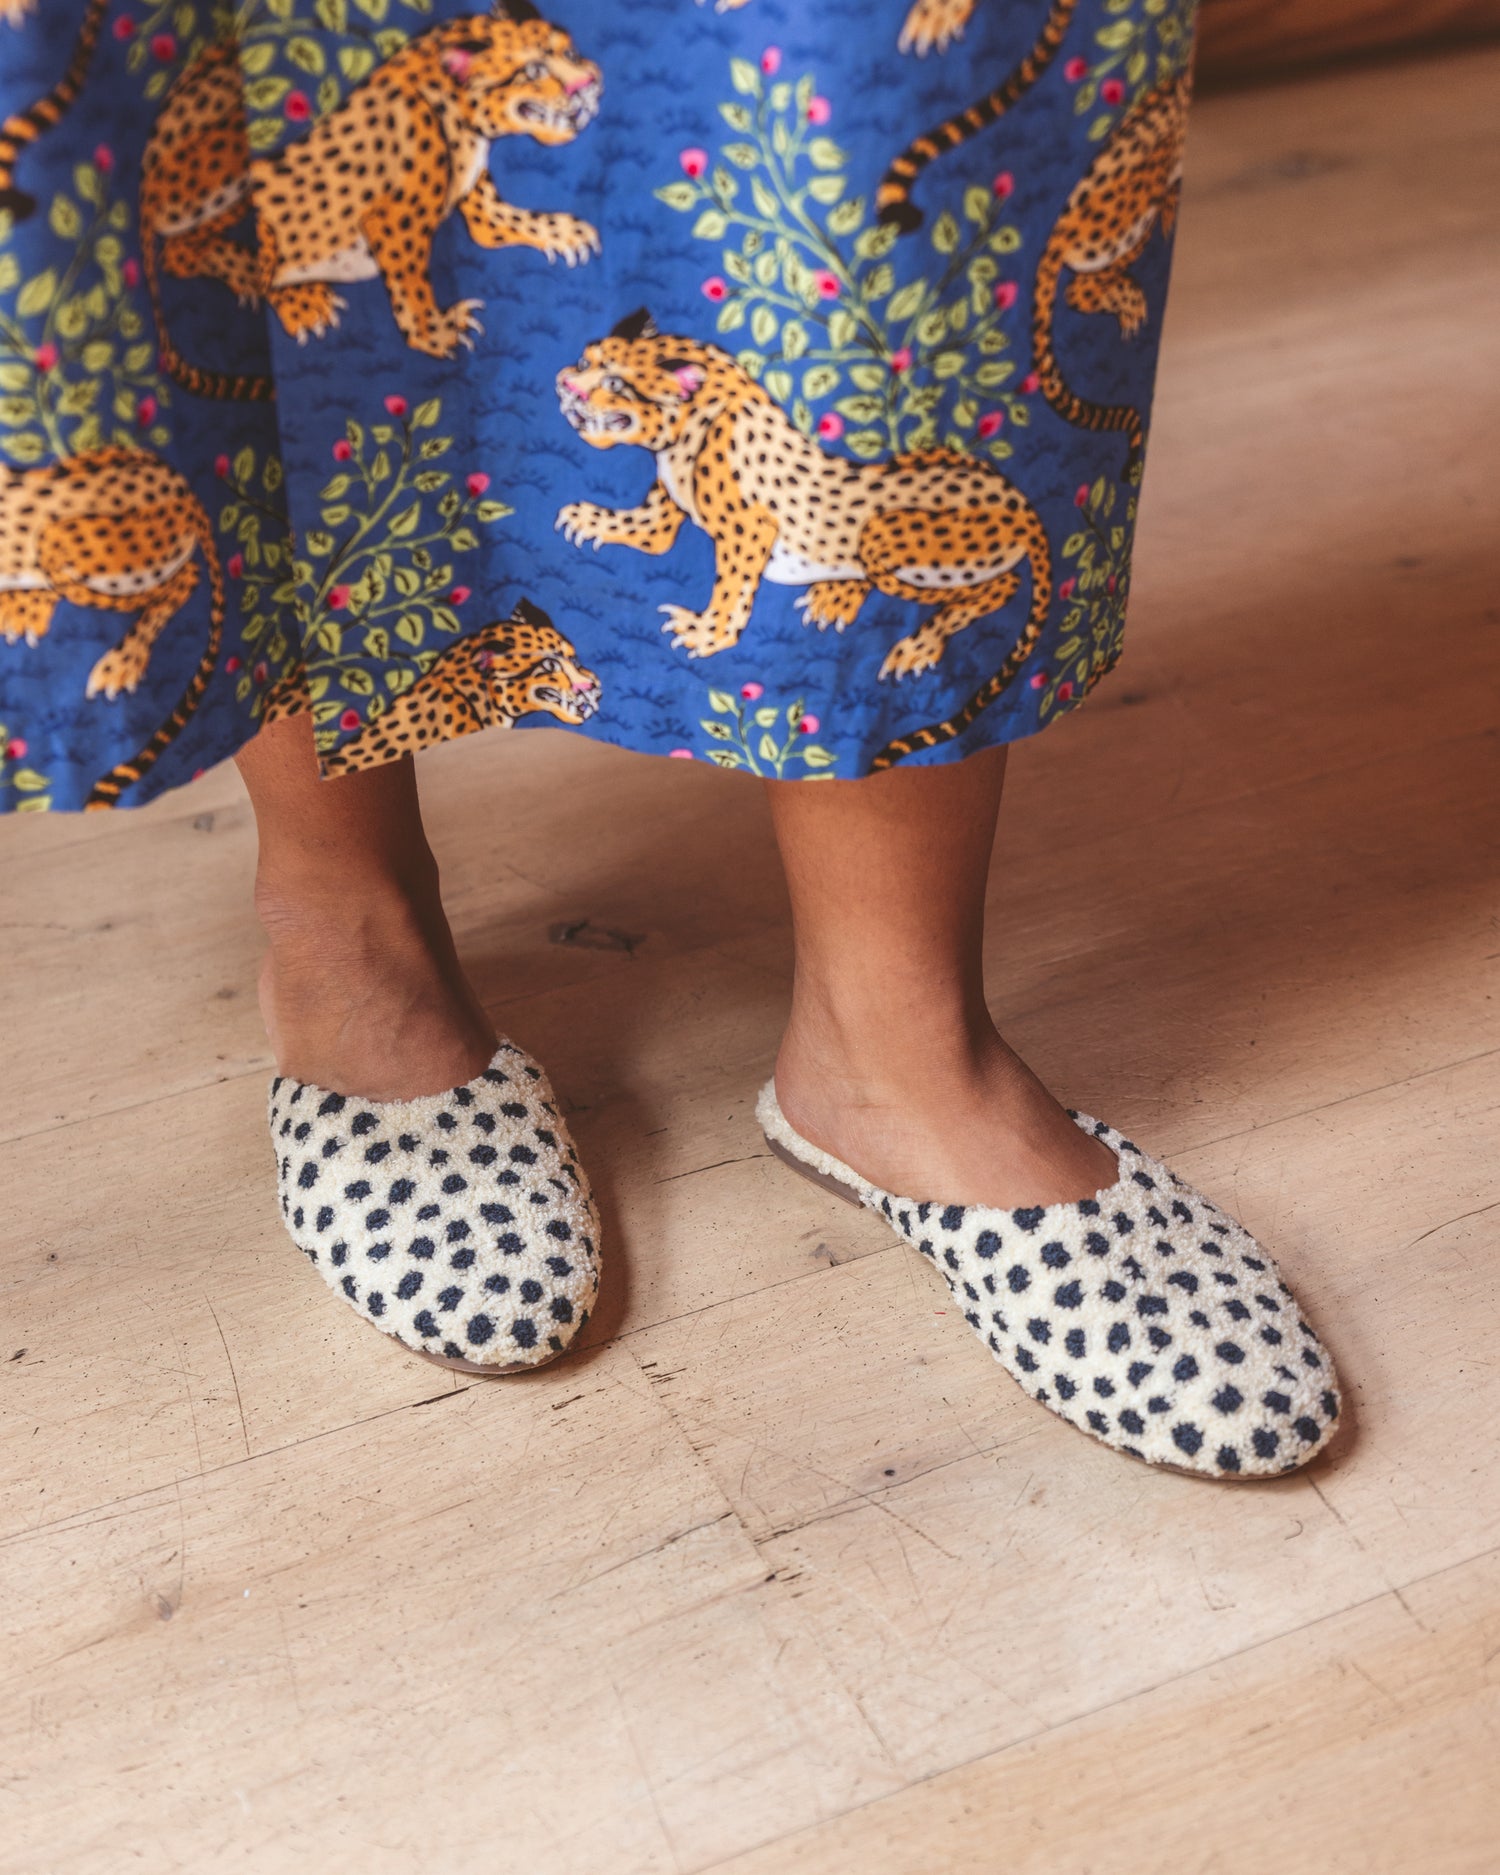 Leopard Spot - Tufted Slippers - Cream - Printfresh